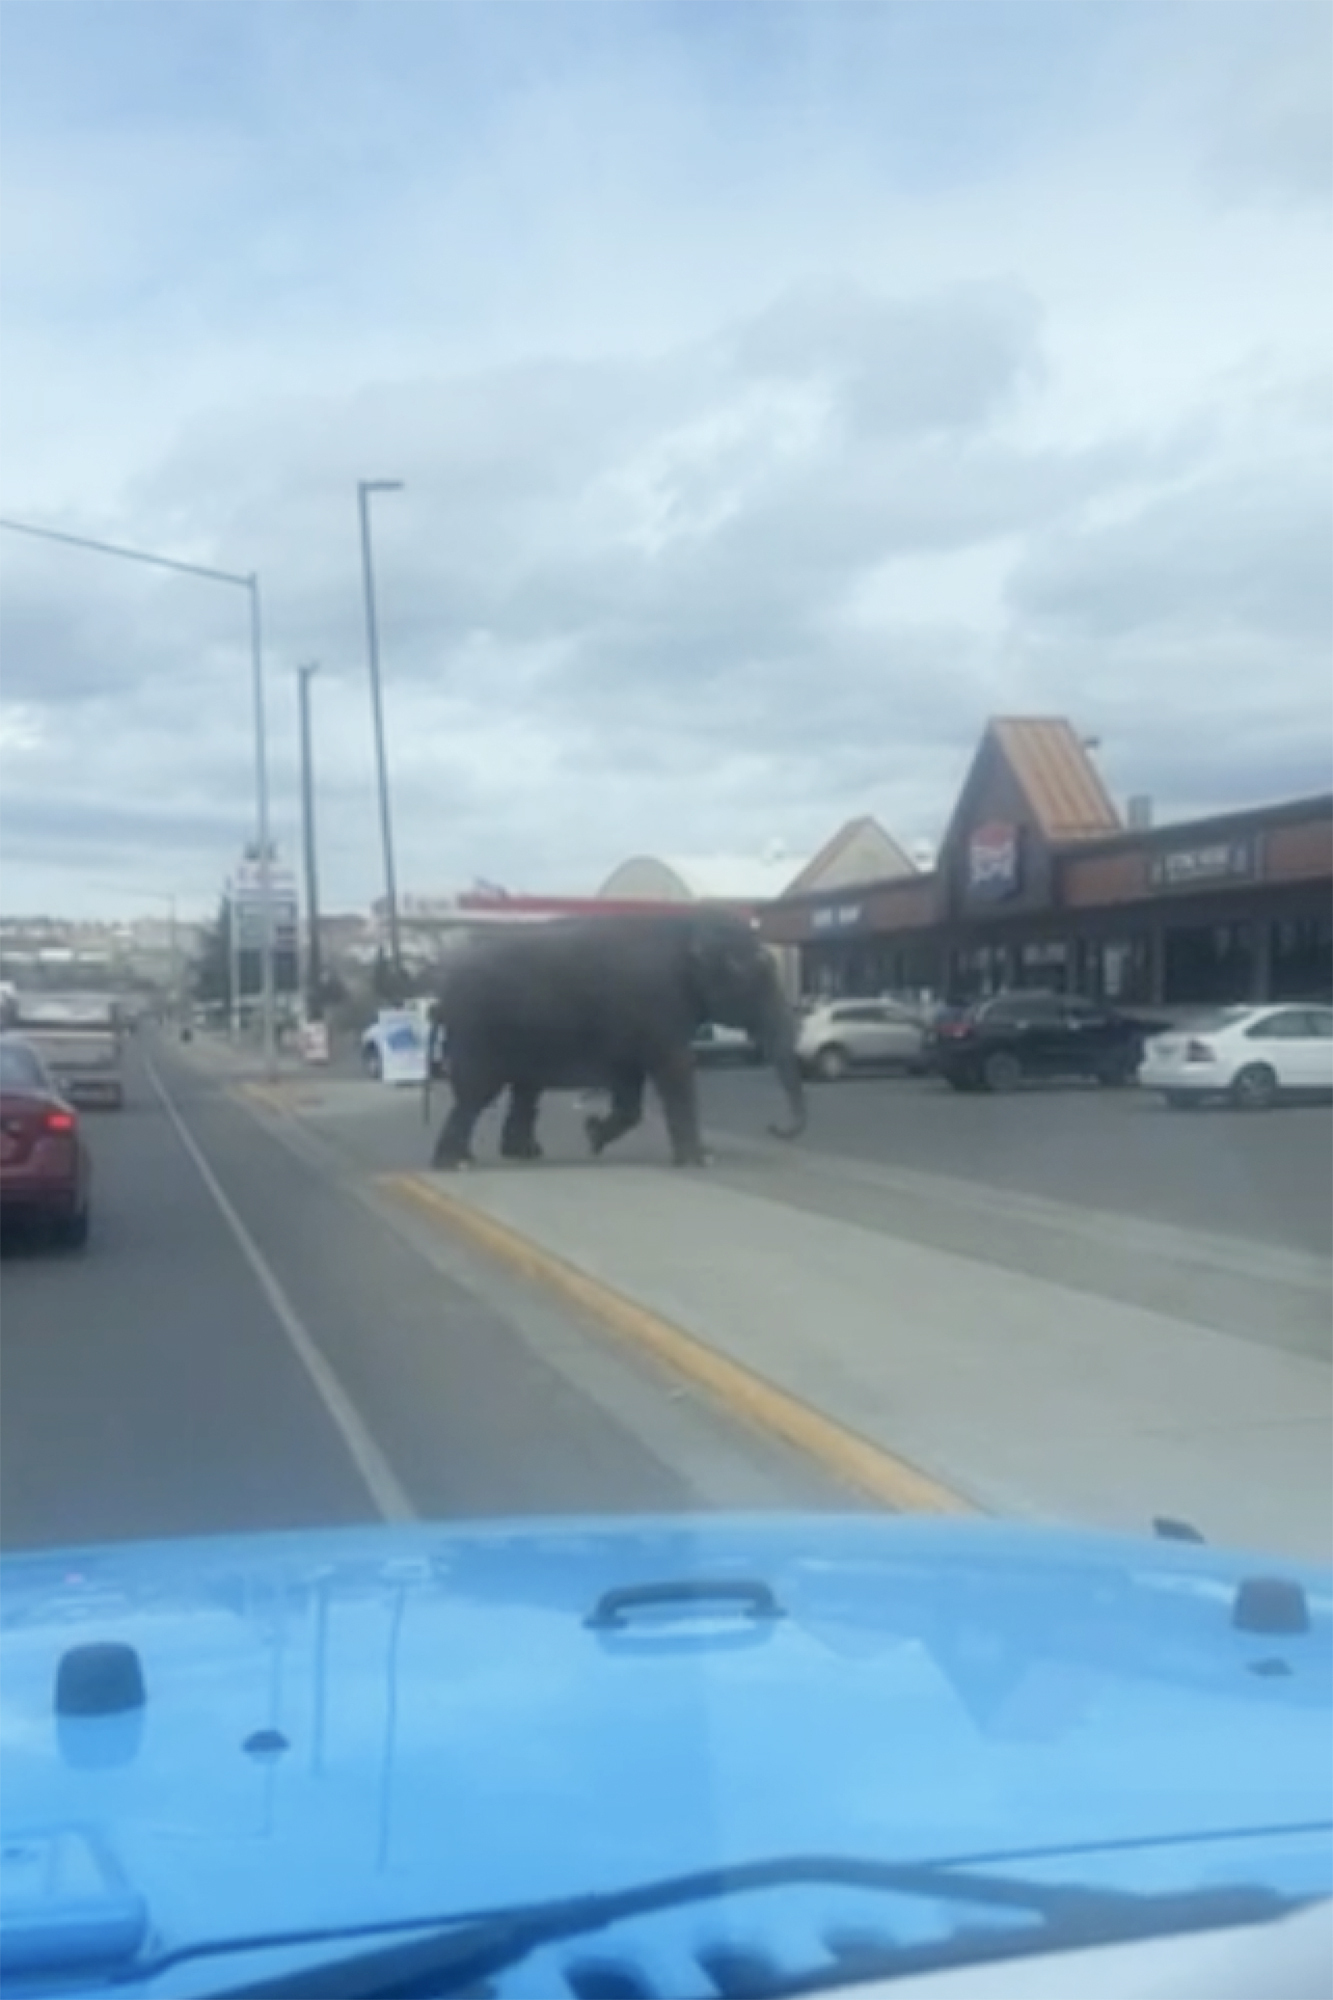 a vehicle backfiring startled a circus elephant into a montana street. she still performed tuesday